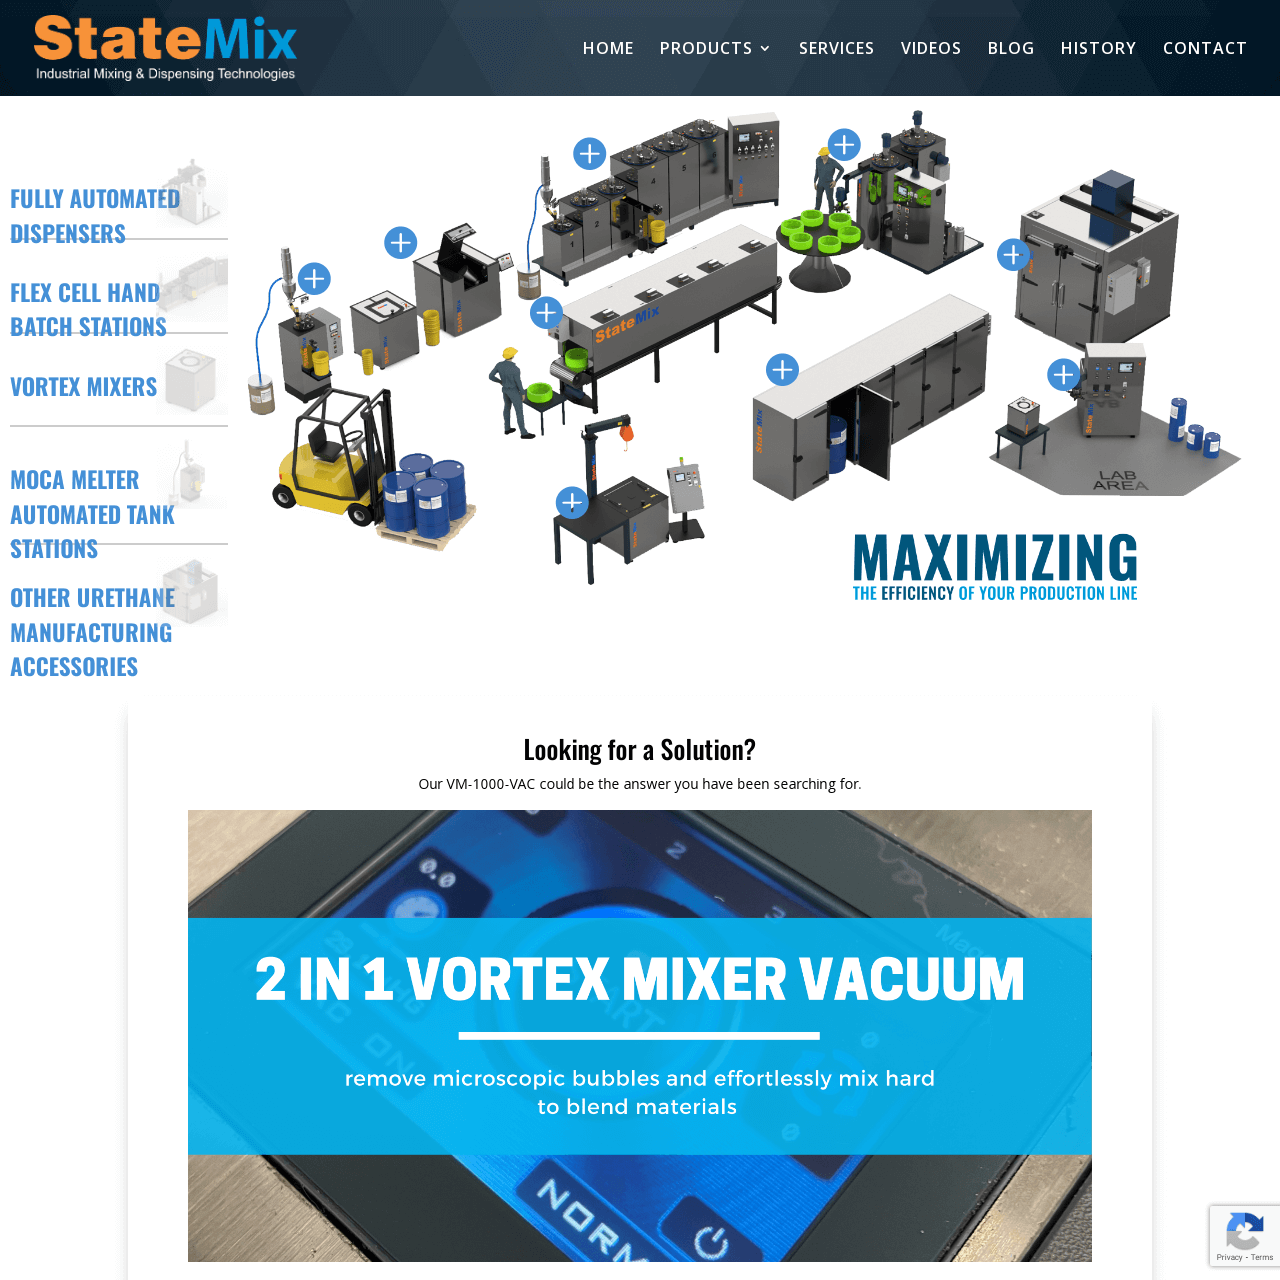 StateMix website designed by 6P Marketing